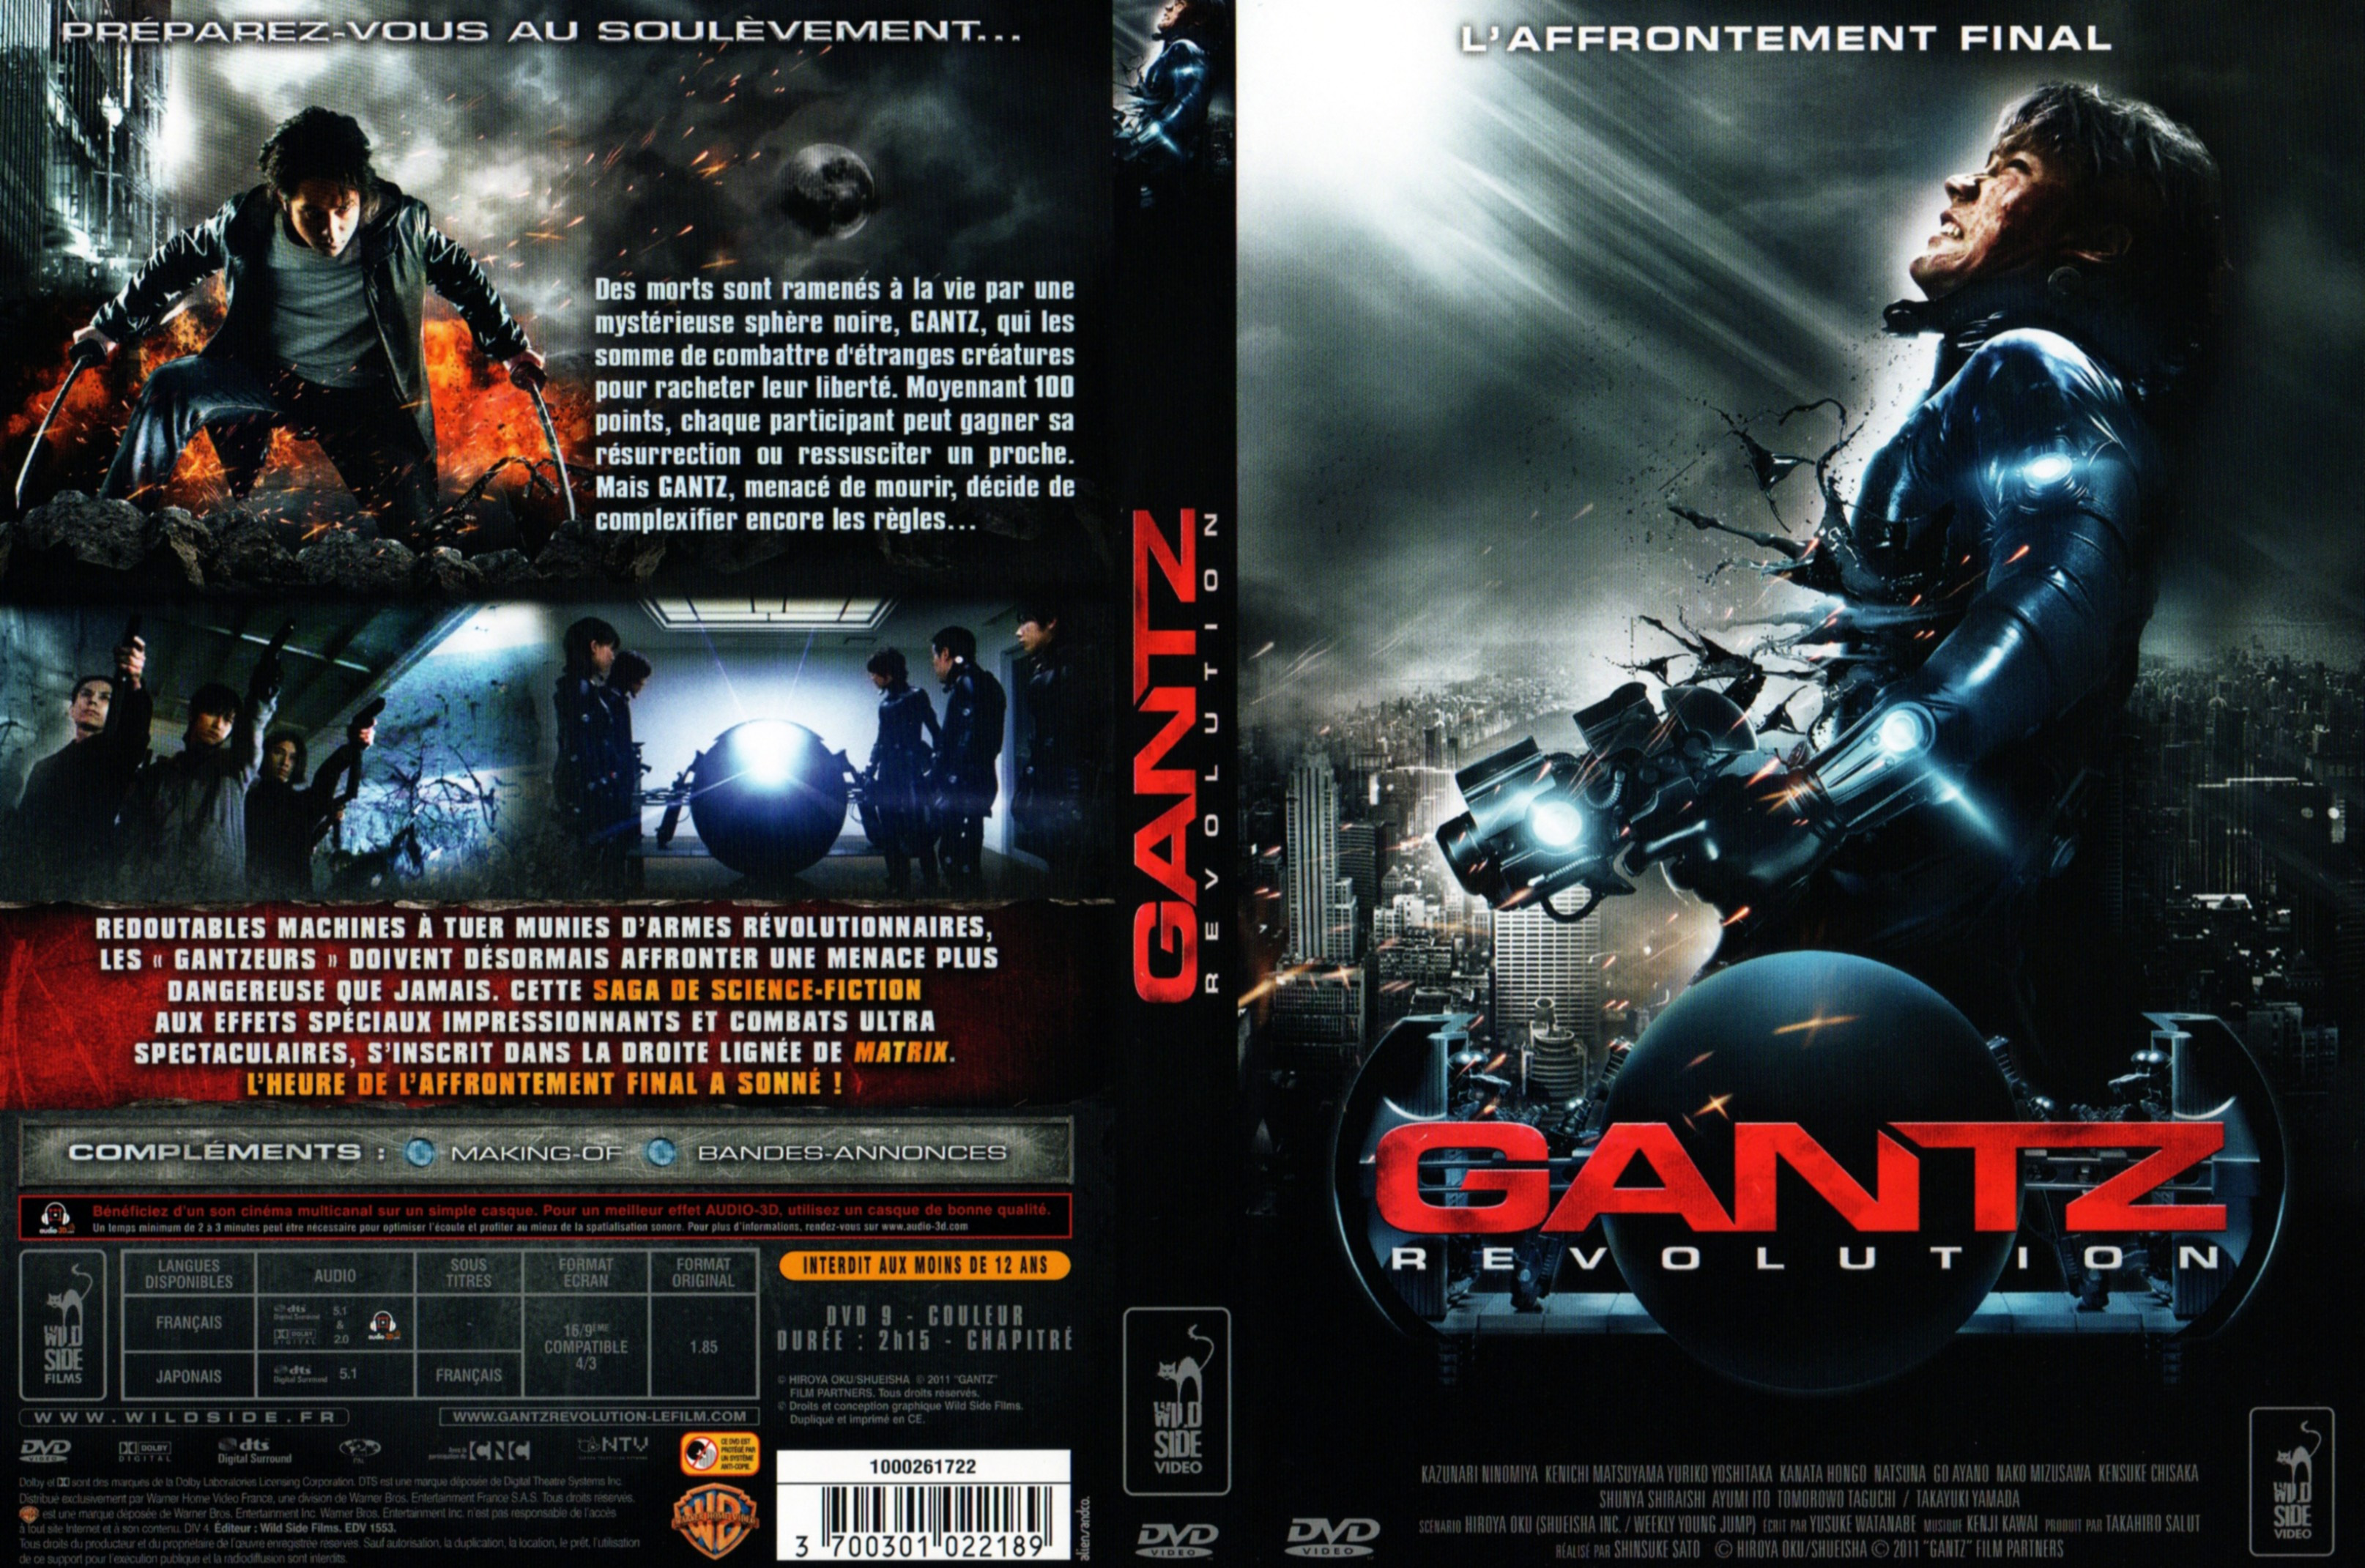 Jaquette DVD Gantz revolution